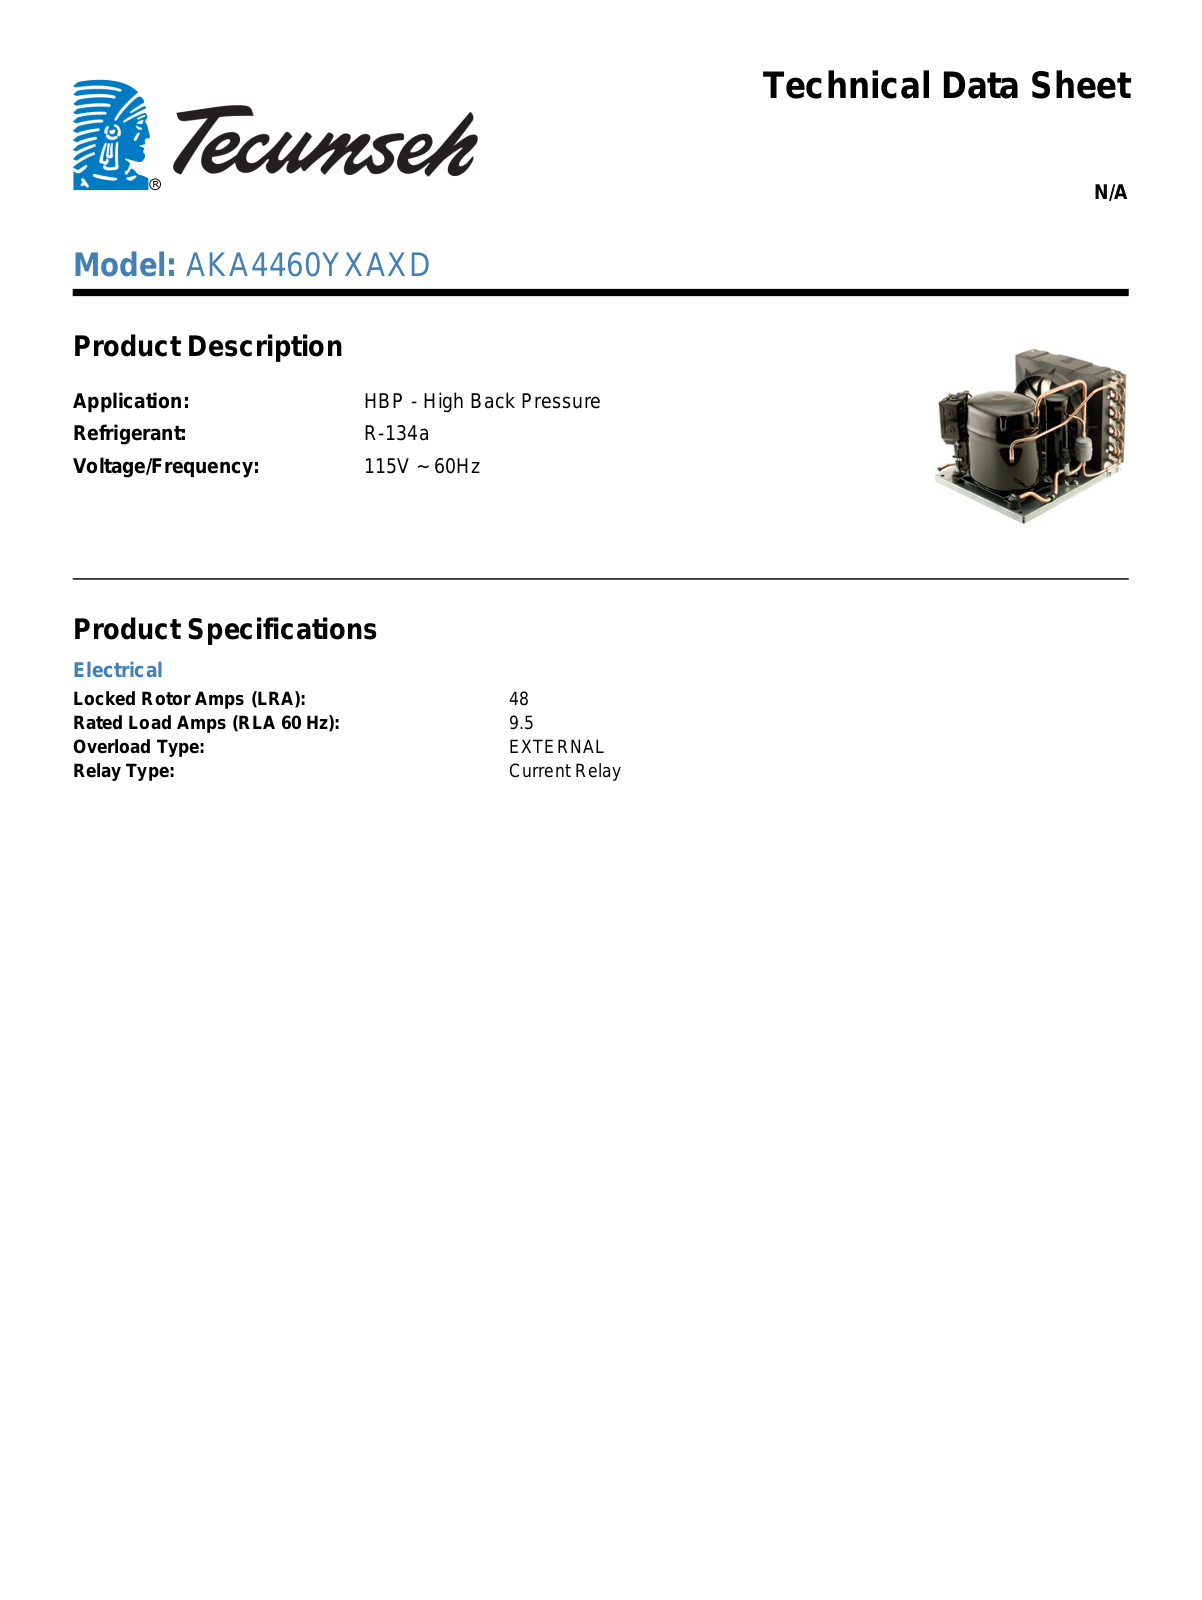 Tecumseh AKA4460YXAXD Technical Data Sheet